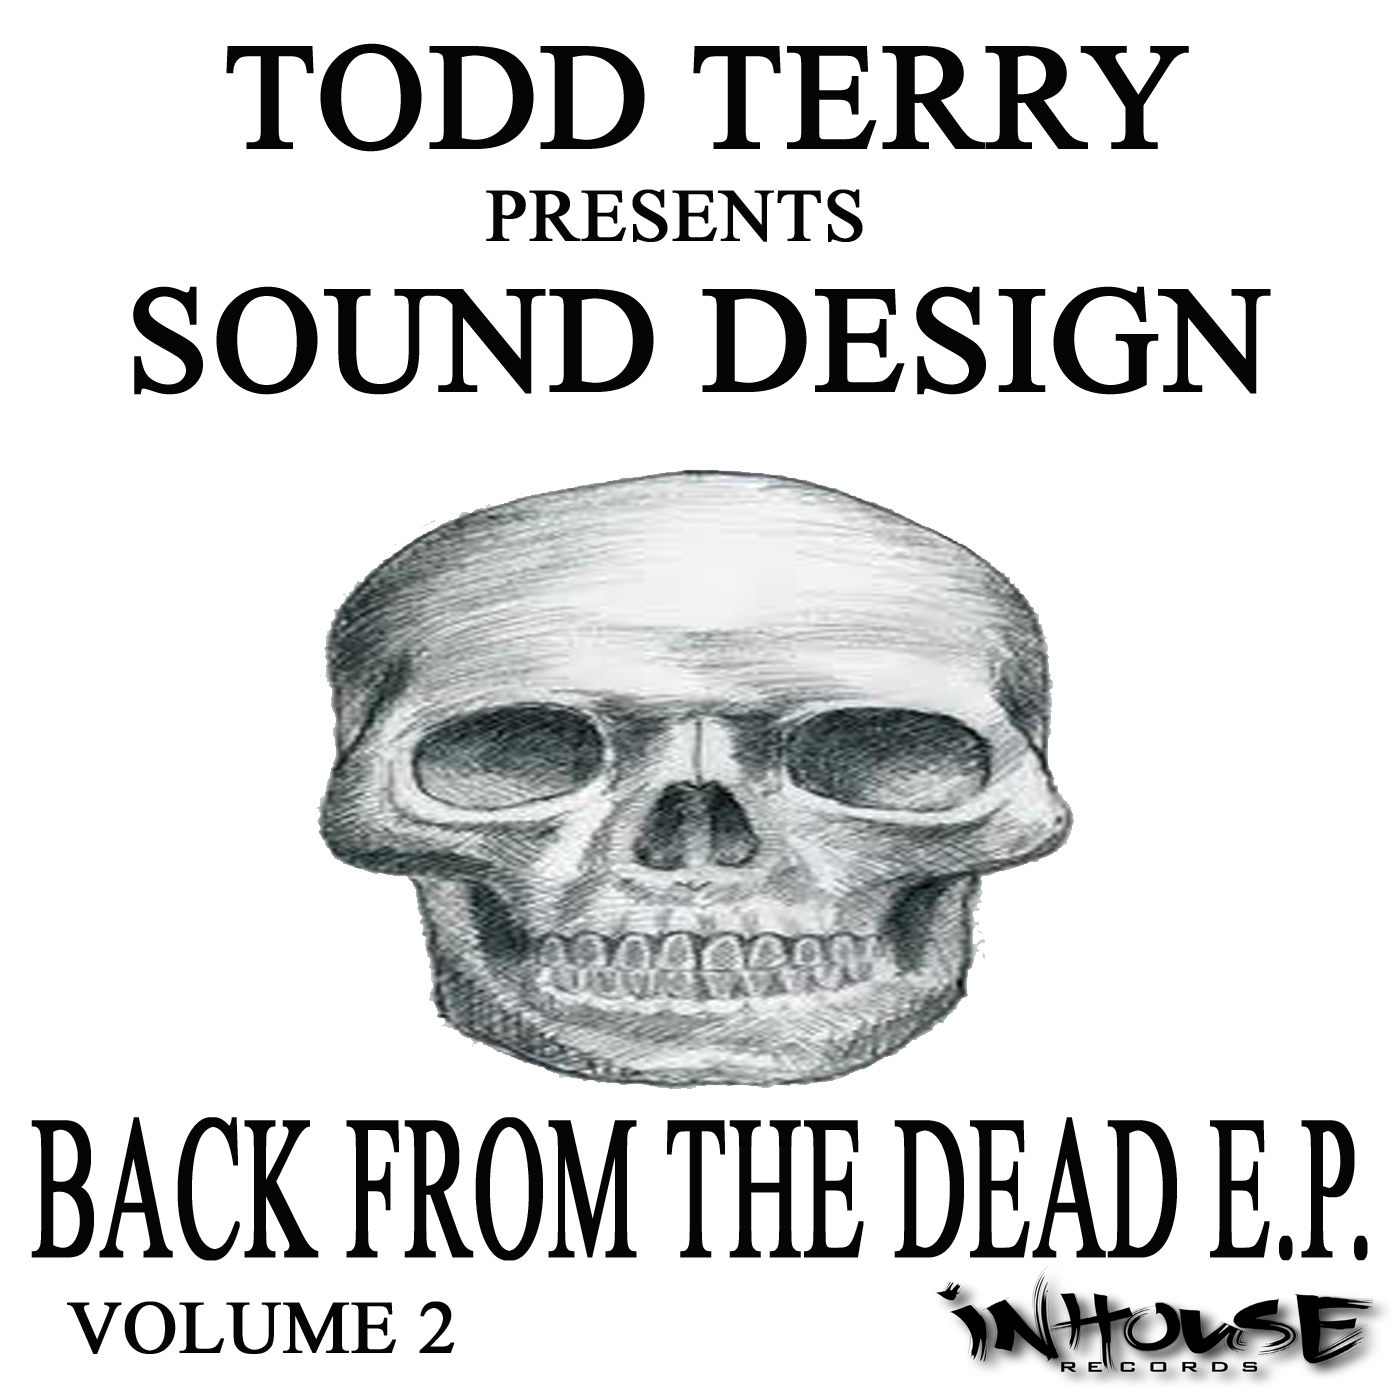 Todd Terry Presents Sound Design - Back From The Dead E.P. Vol 2